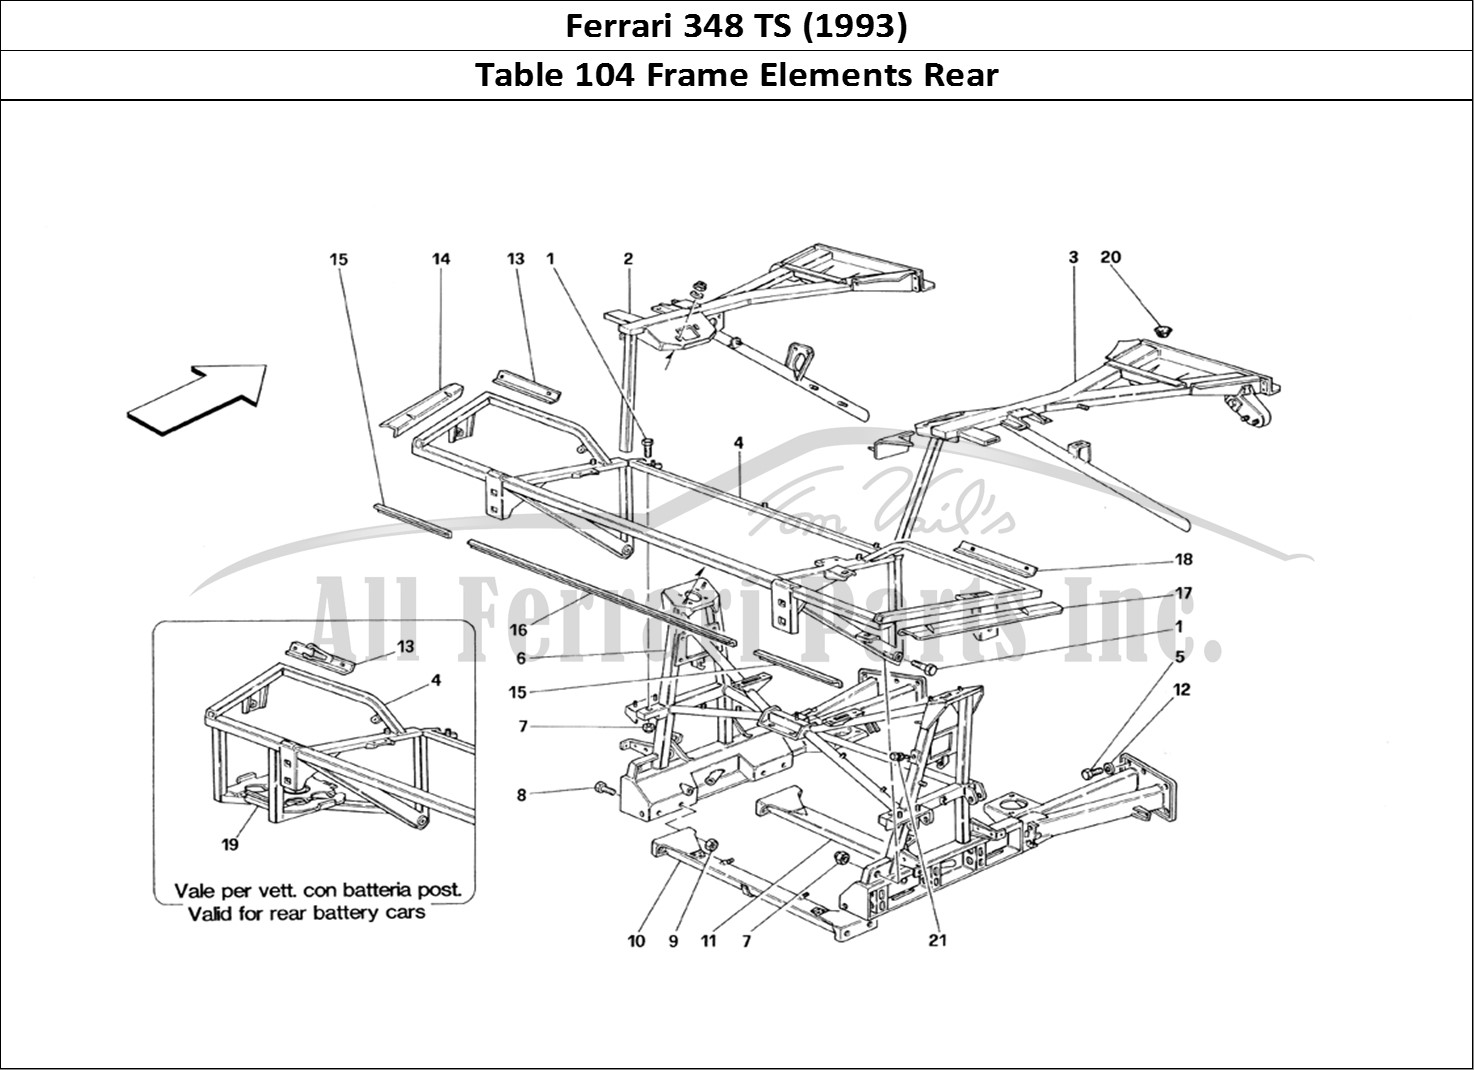 Ferrari Parts Ferrari 348 TB (1993) Page 104 Frame - Rear Part Element